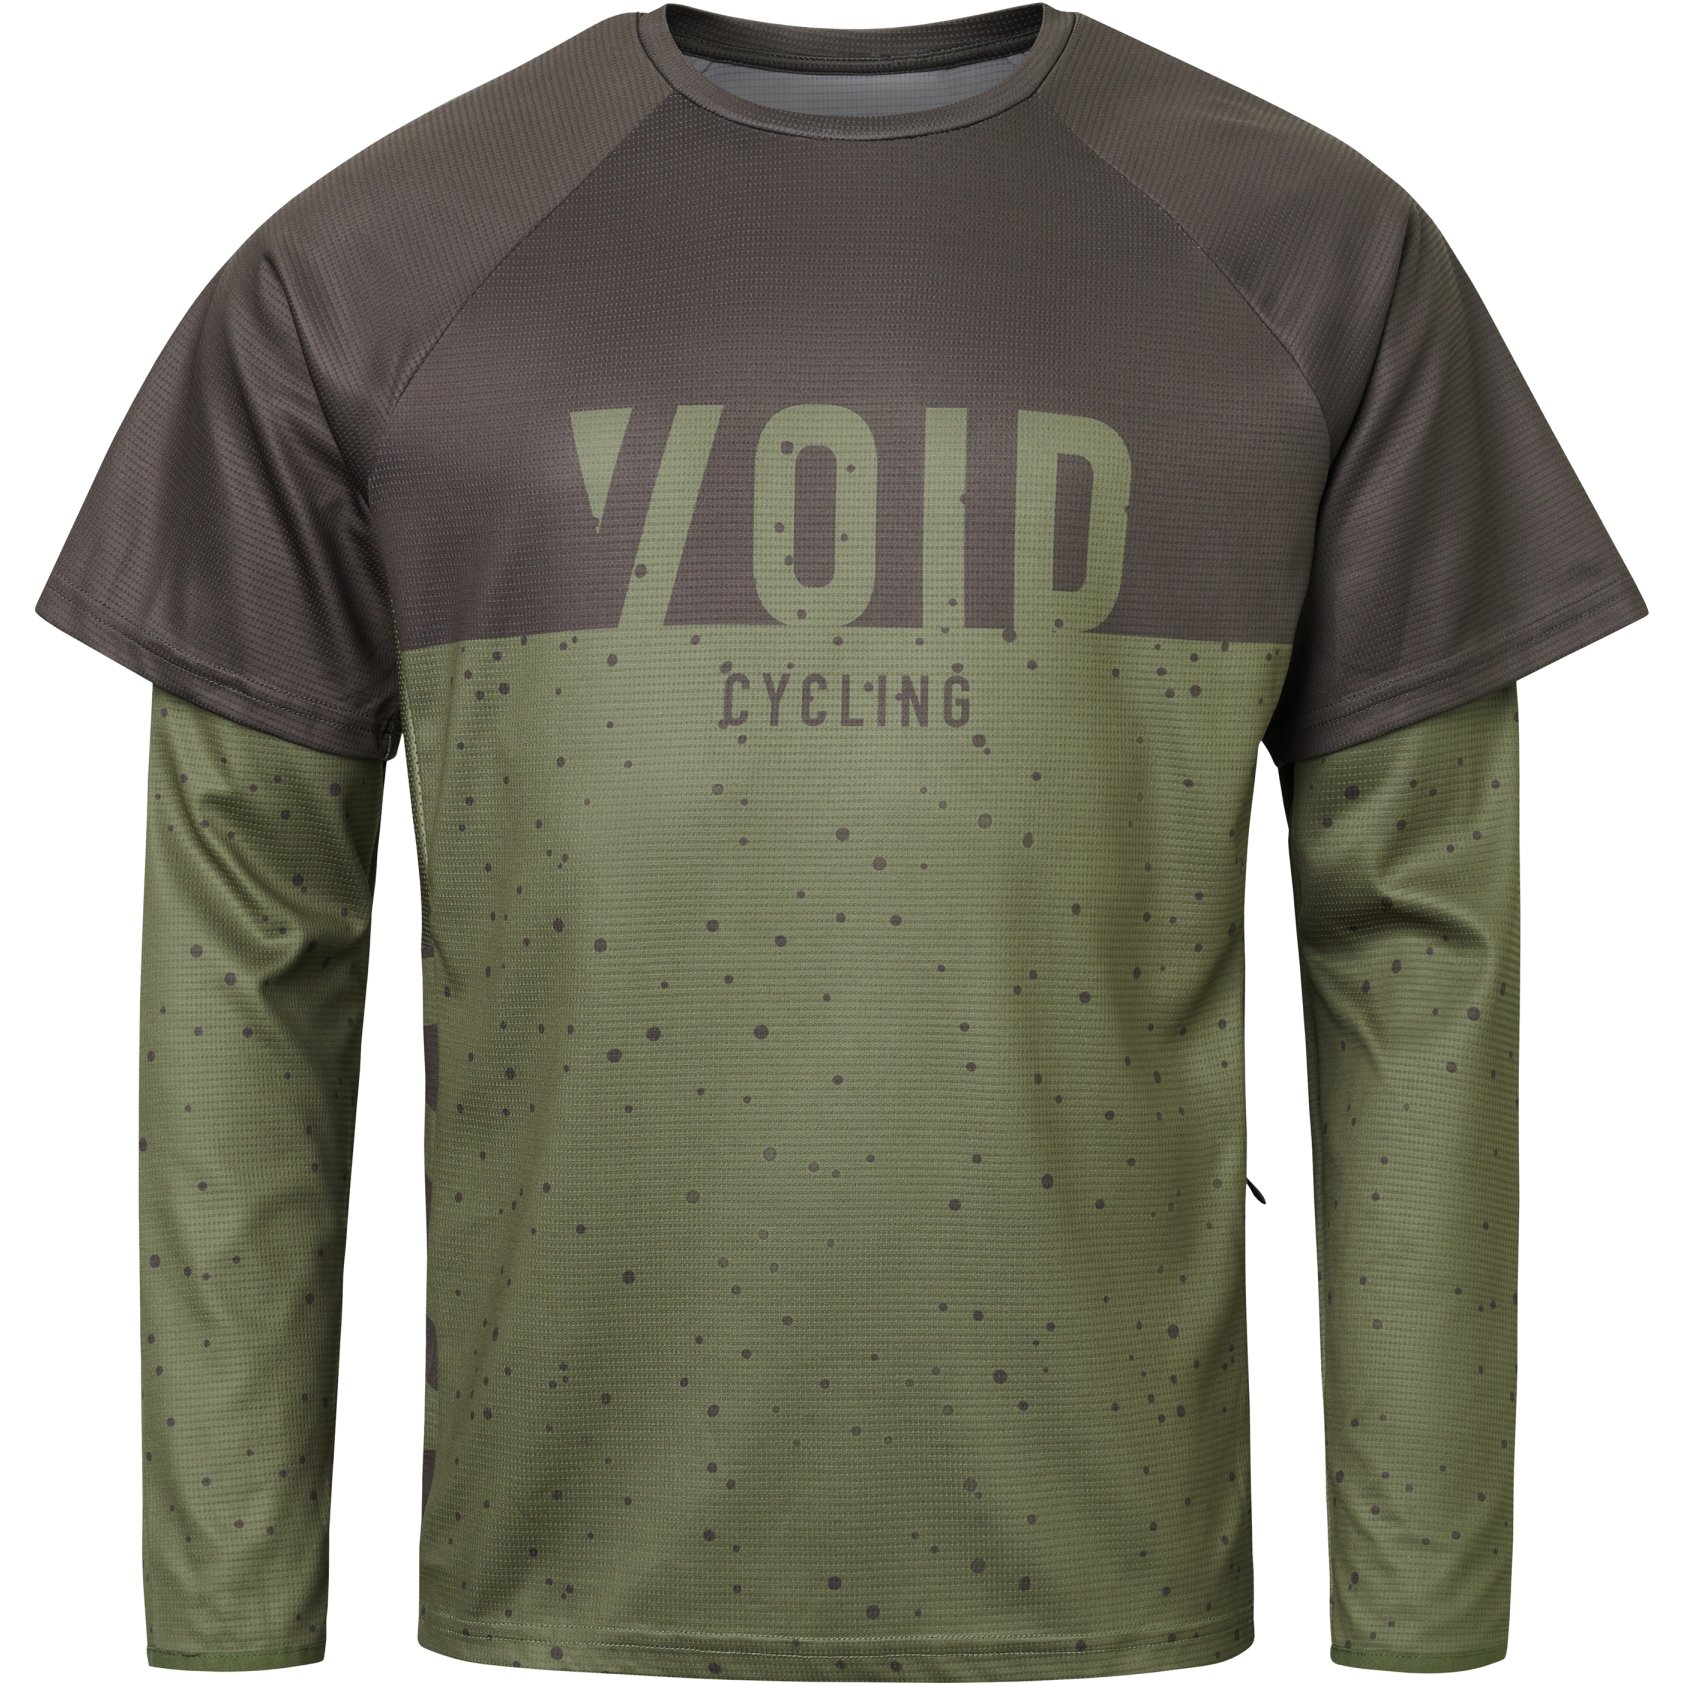 Productfoto van VOID Cycling MTB Rock Long Sleeve Jersey - Dark Khaki